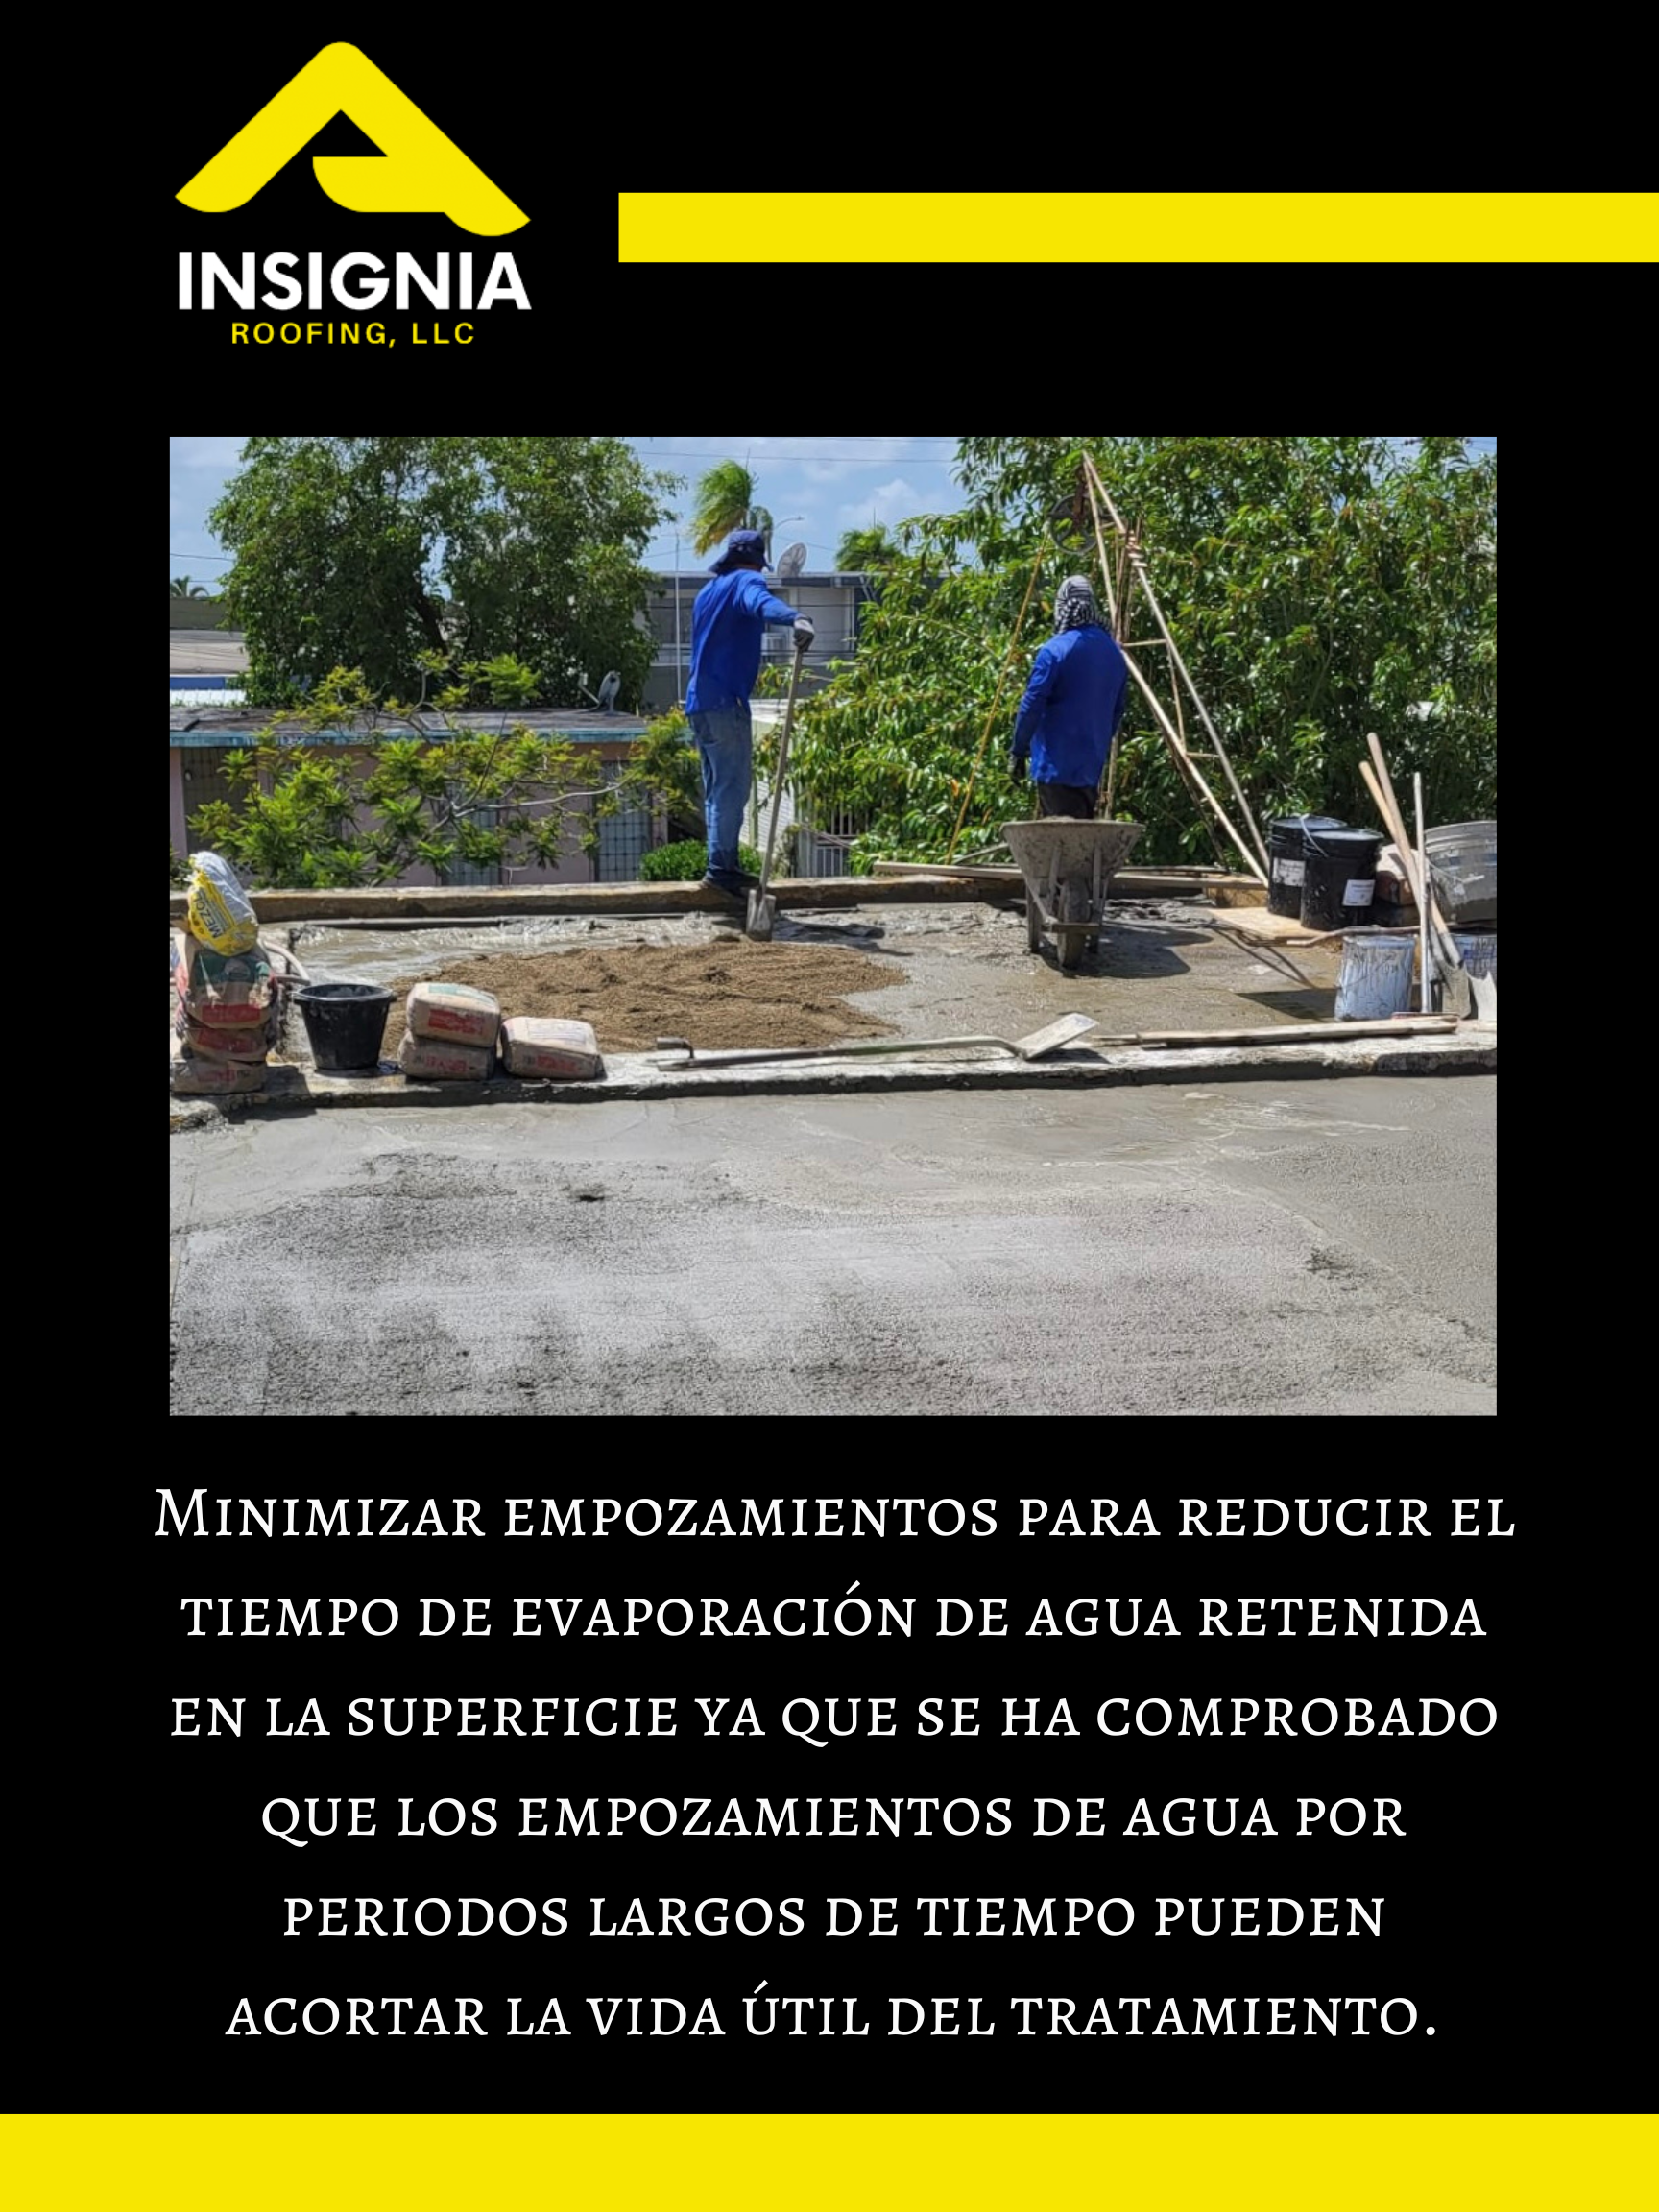 Insignia Roofing, LLC - Foto 4.0 (Servicios)